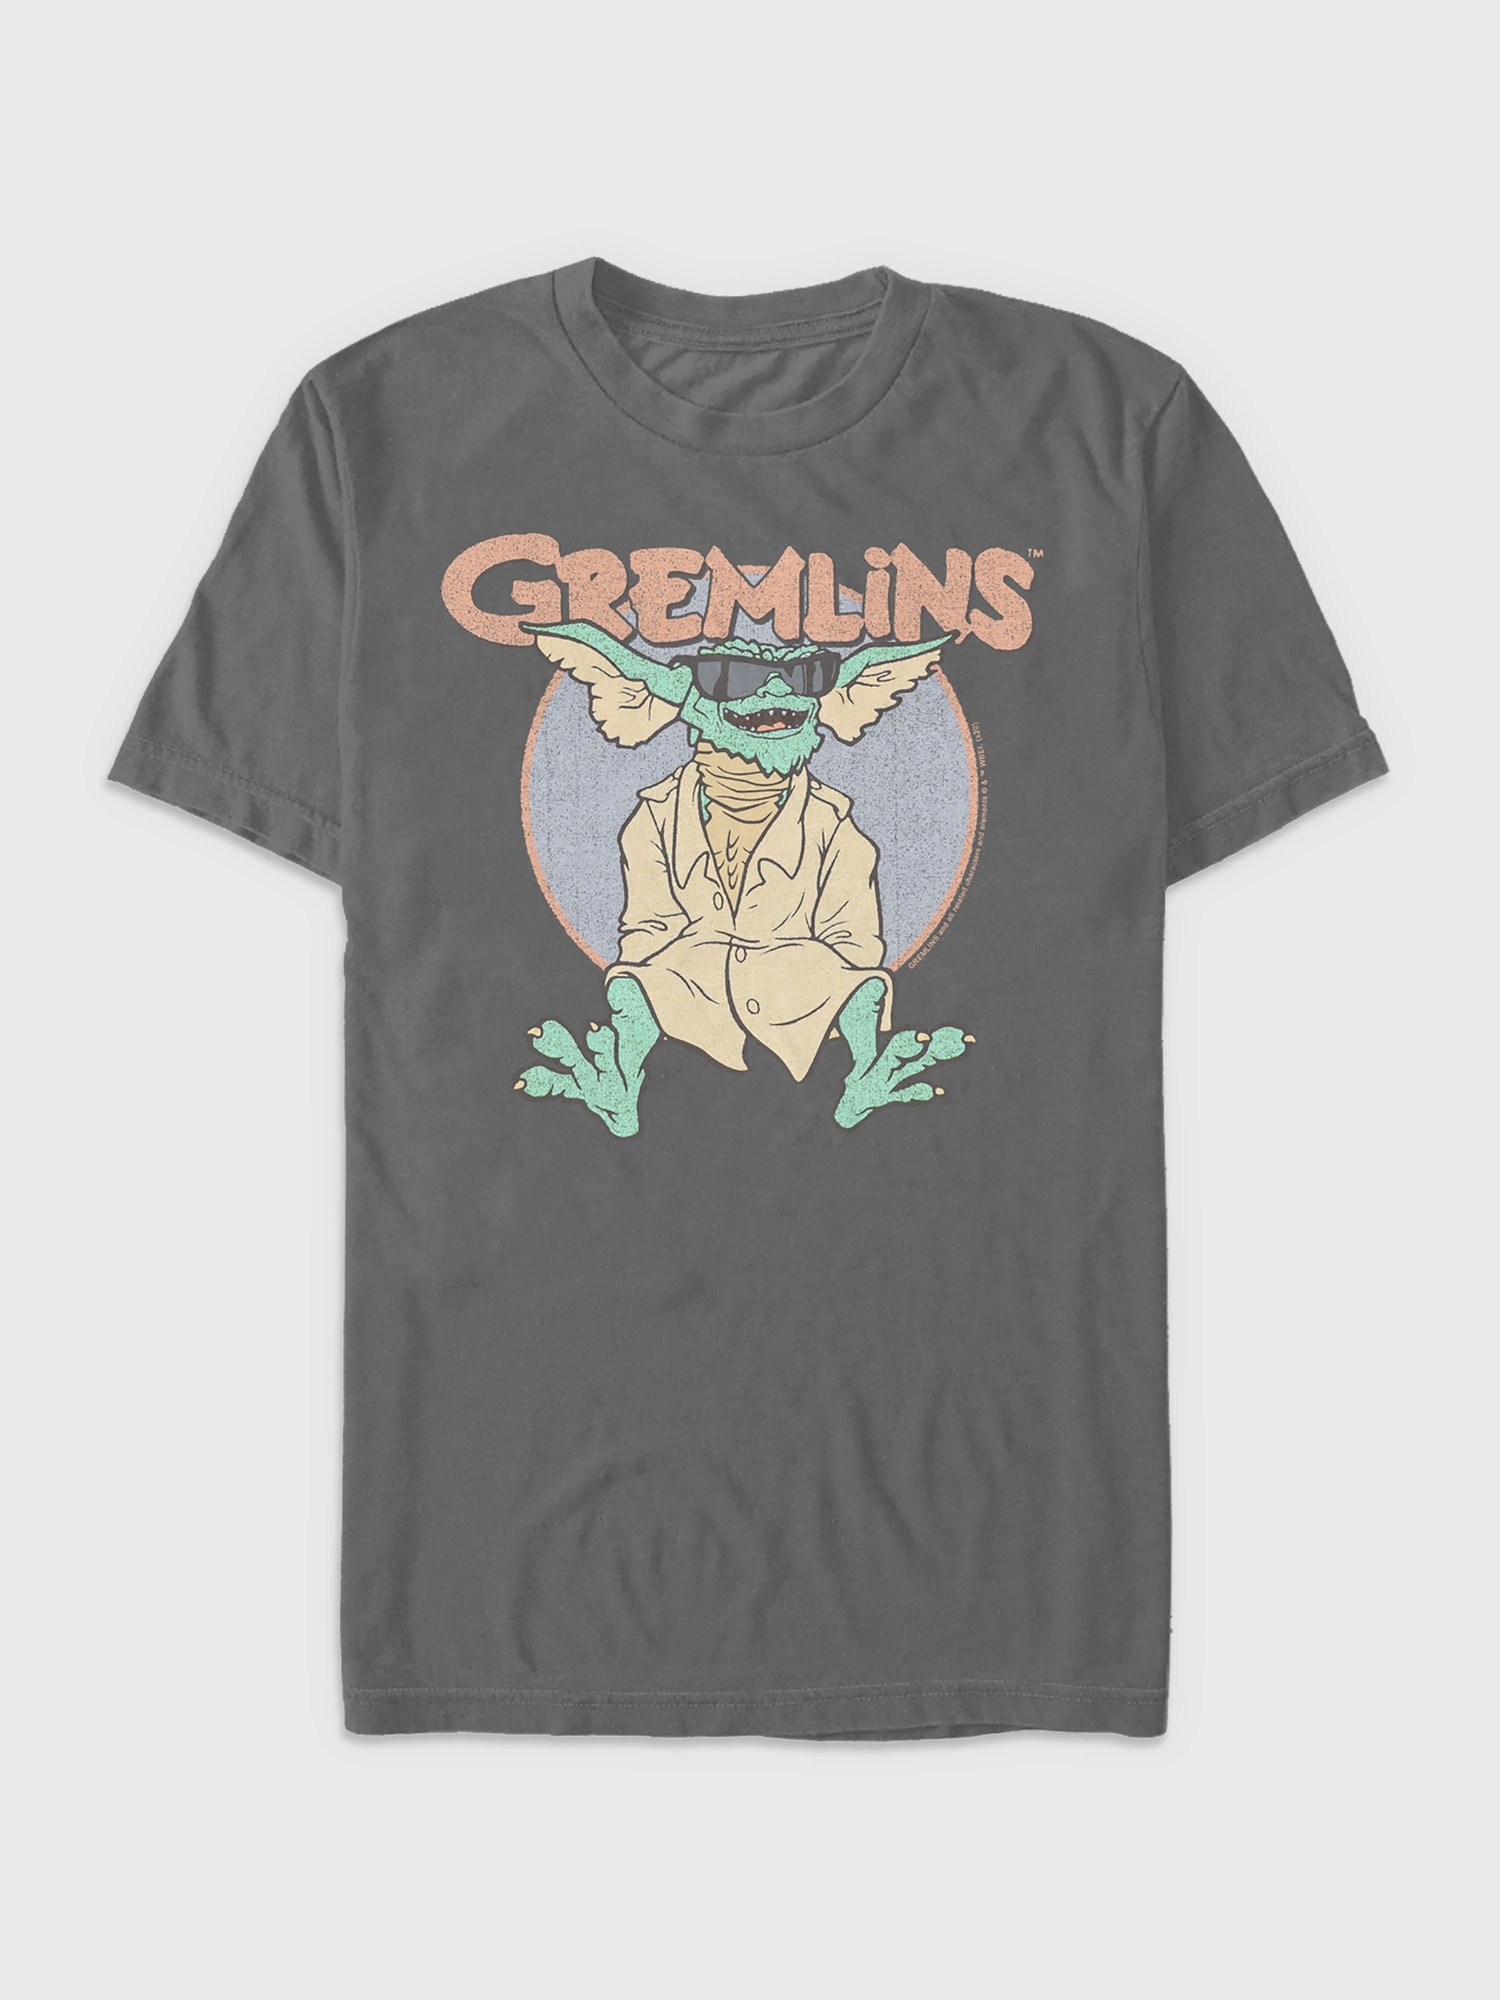 Gremlins Graphic Tee